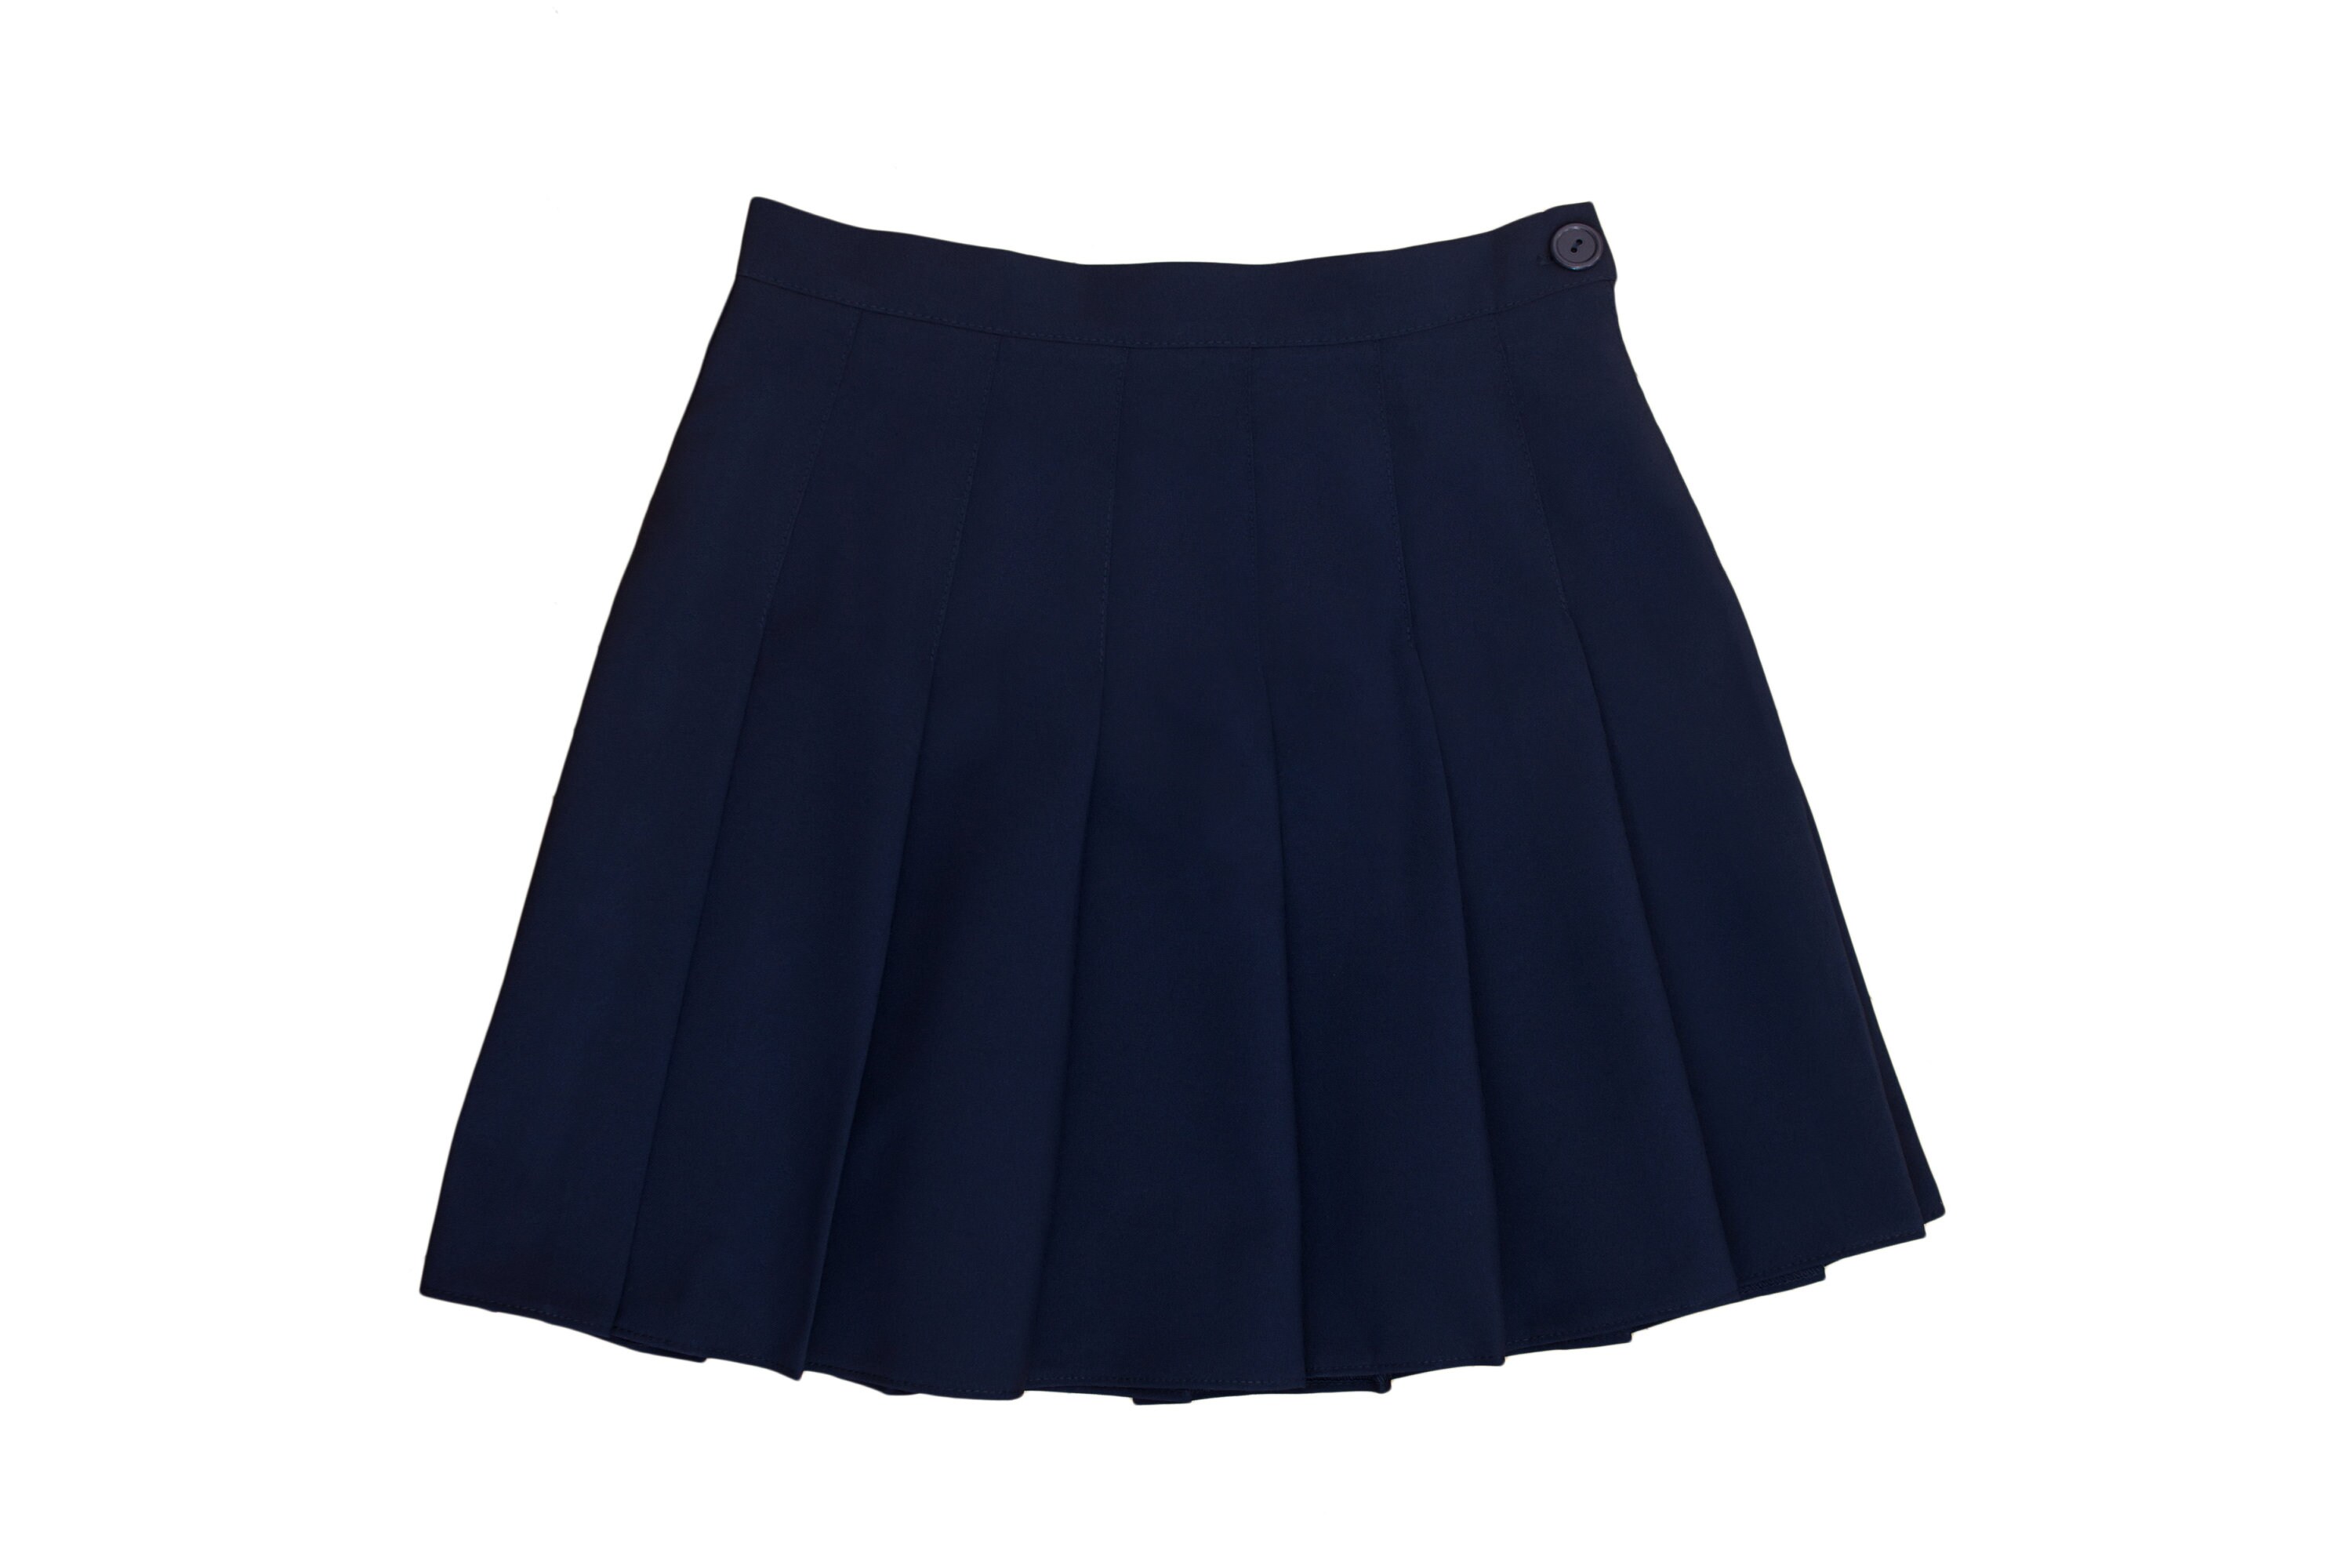 tennis skirt navy blue dark deep pomegranate pleated skirt | Etsy